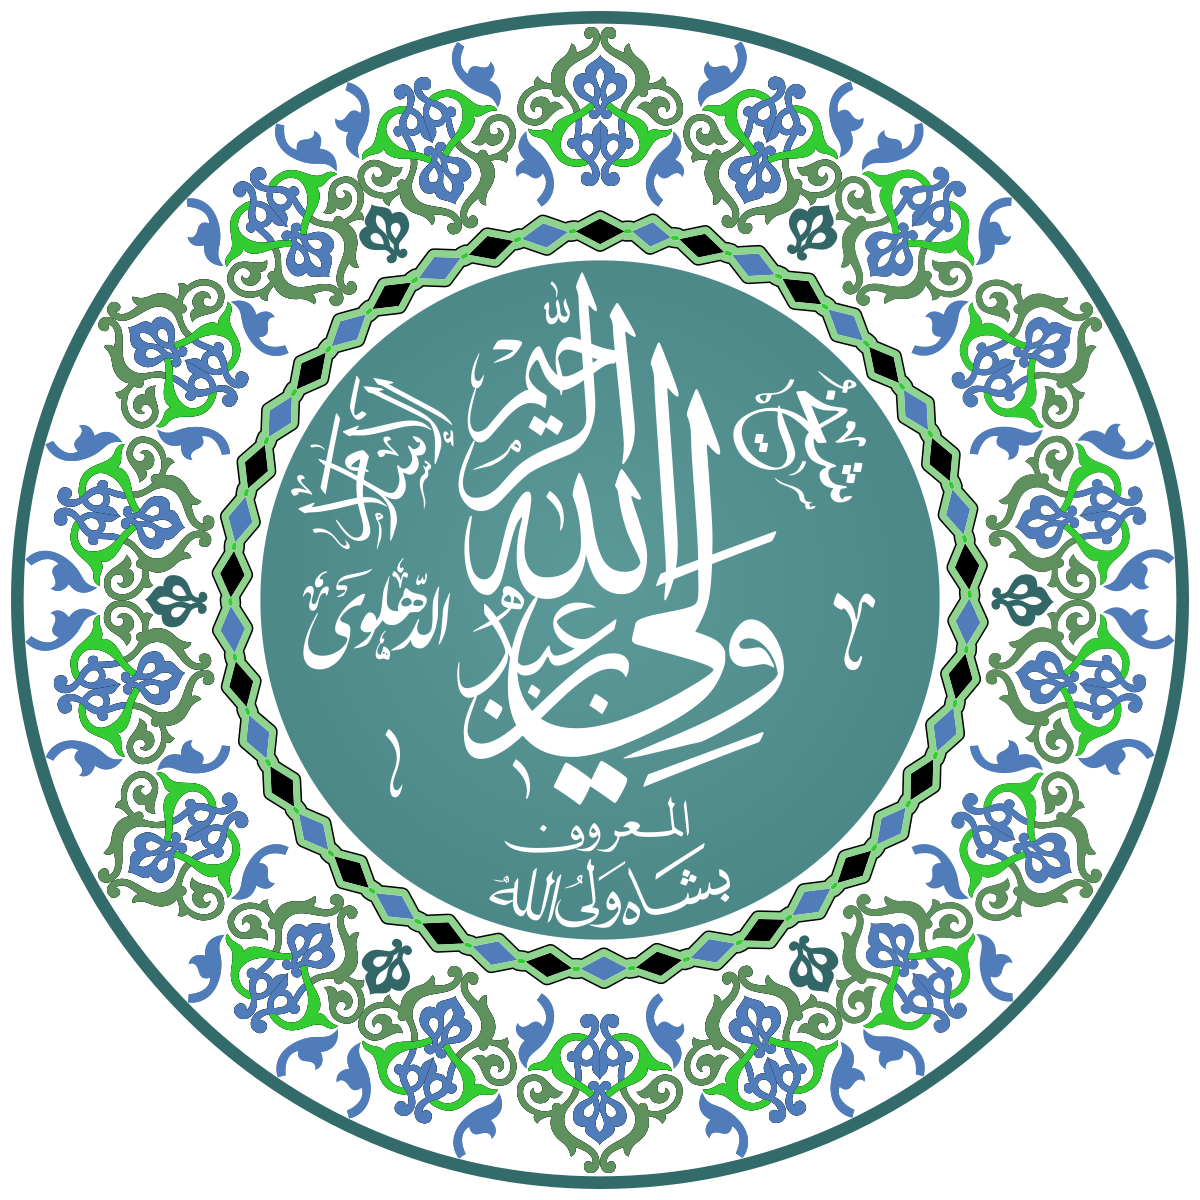 shah wali allah translation of quran